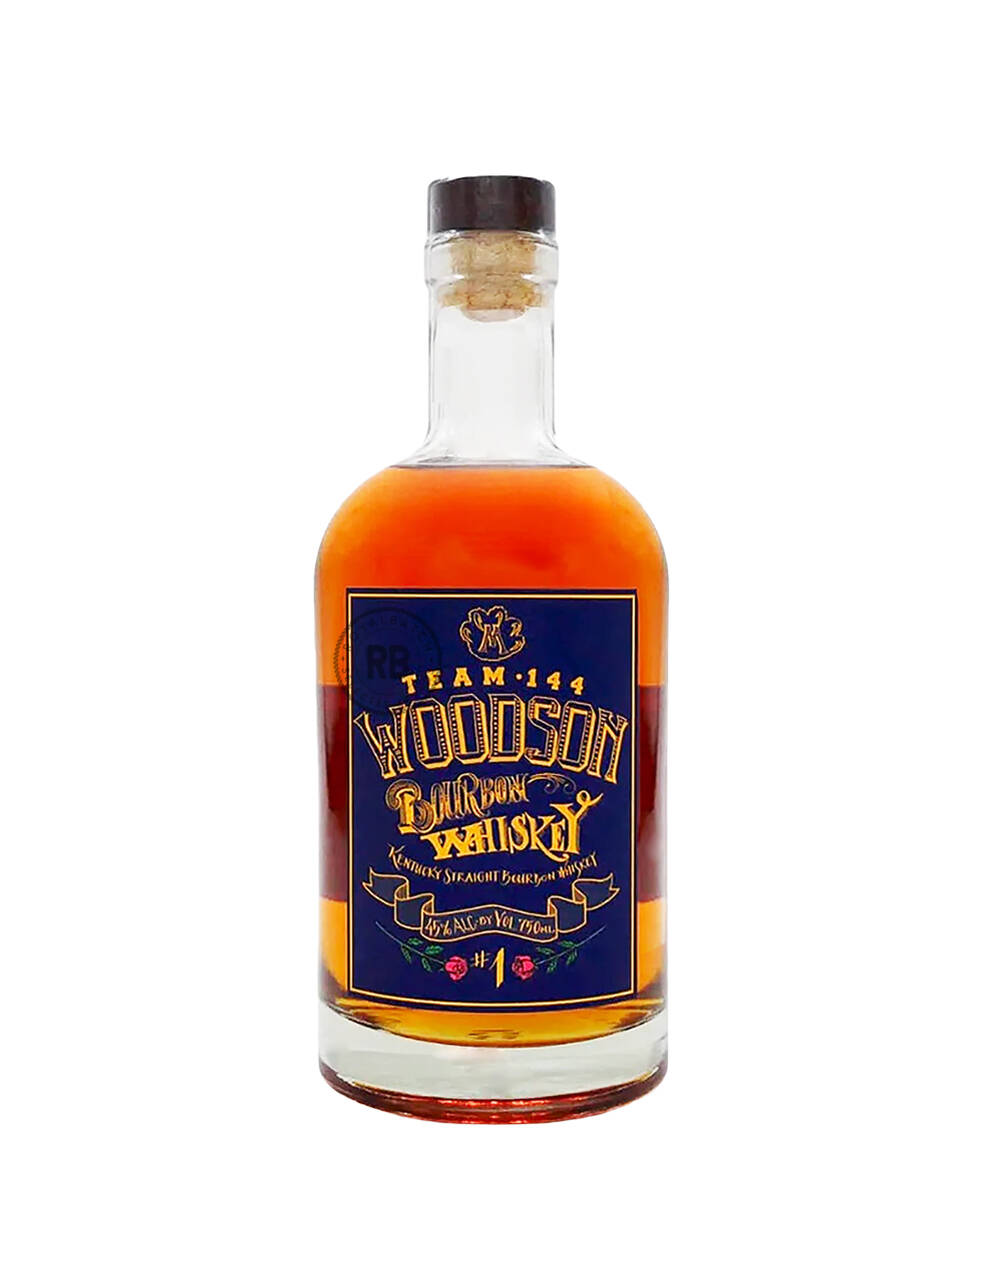 Woodson Team 144 Michigan Commemorative Bottle Bourbon Whiskey